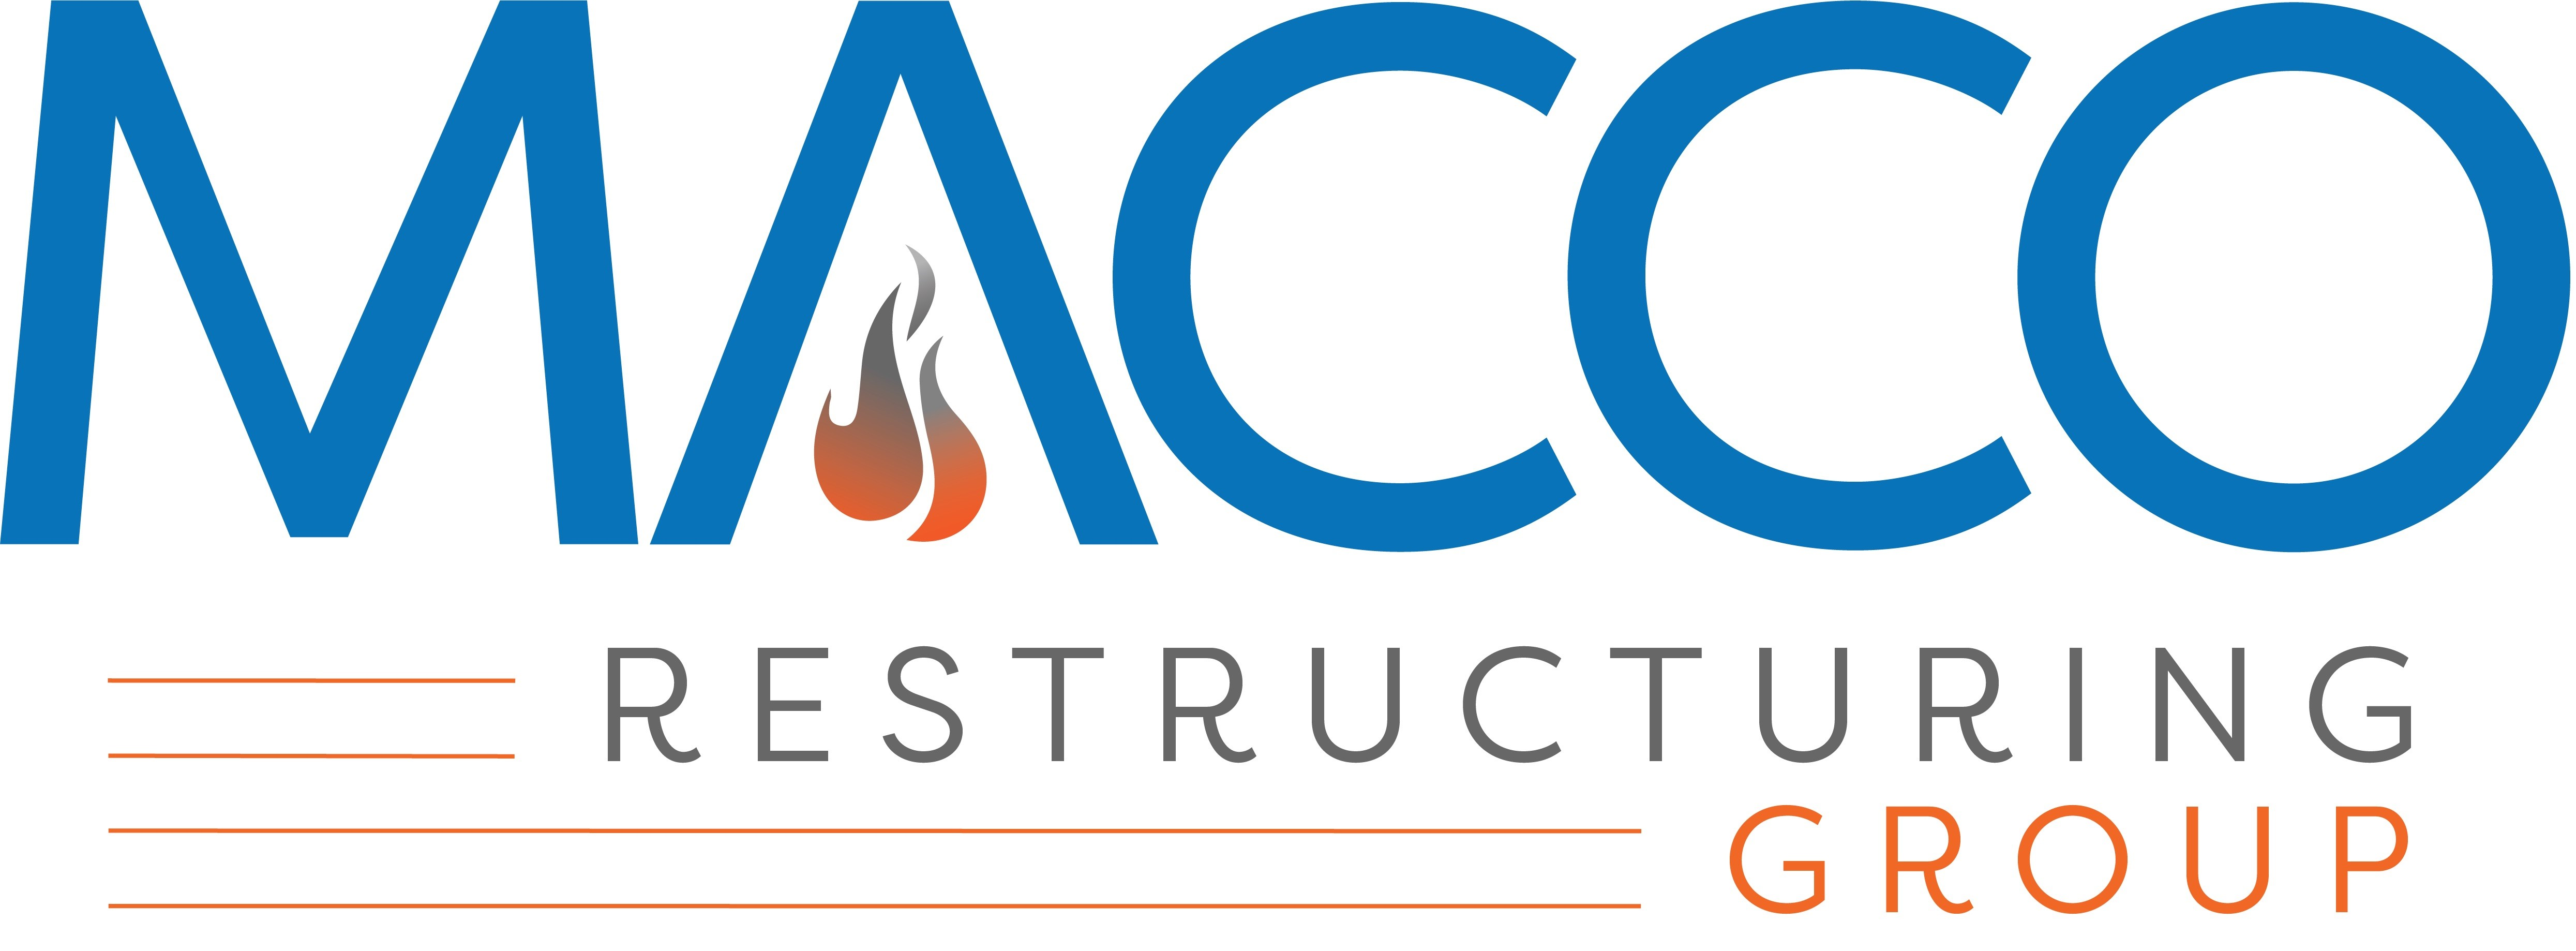 MACCO Restructuring Group, LLC logo